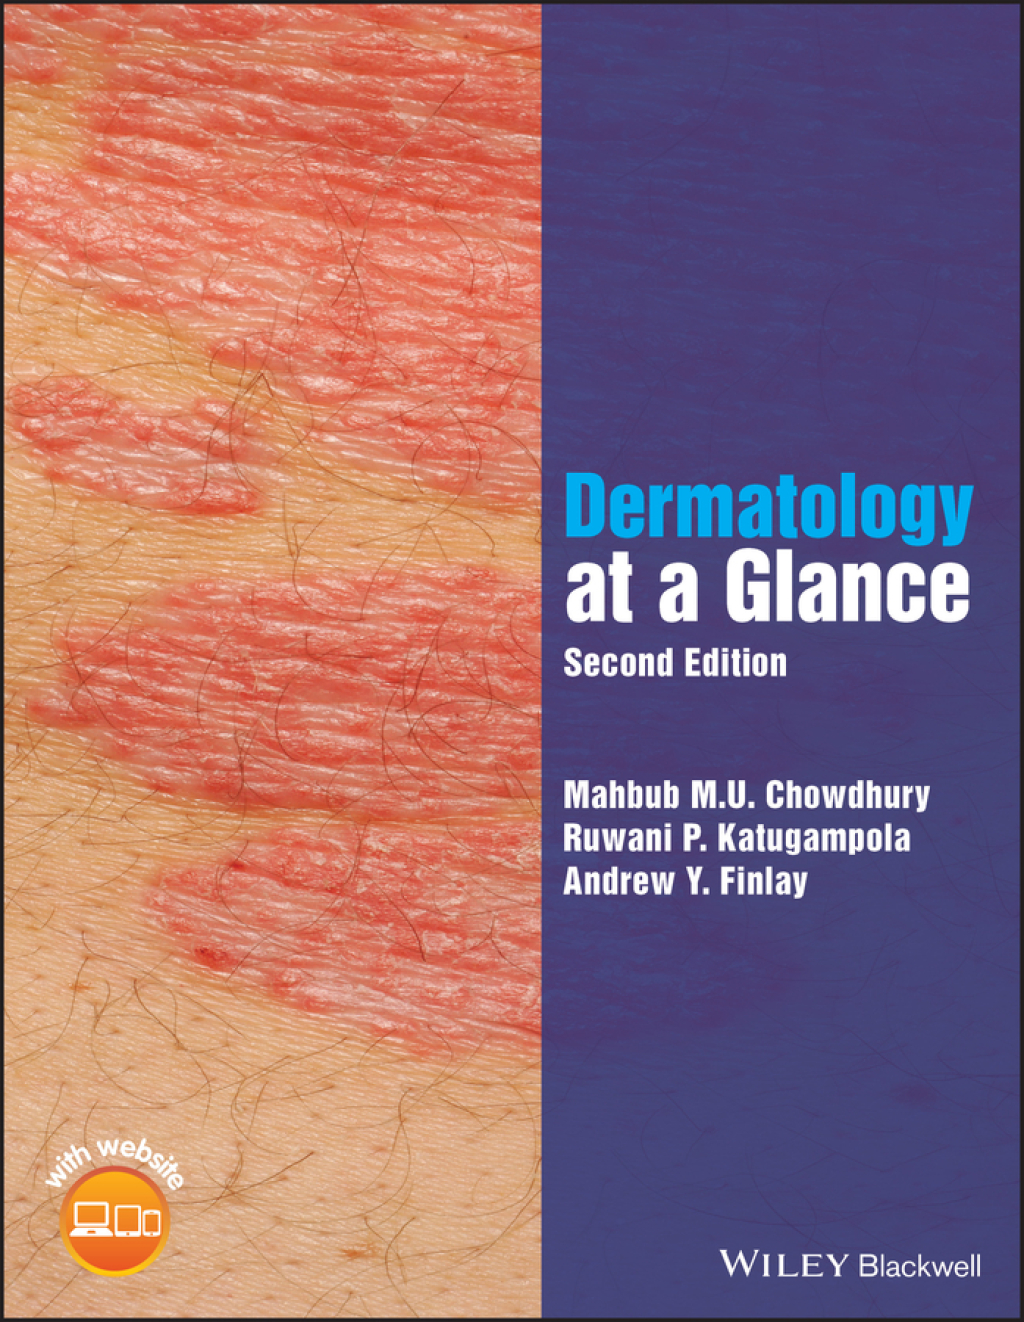 Dermatology at a Glance (eBook) - Mahbub M. U. Chowdhury; Ruwani P. Katugampola; Andrew Y. Finlay